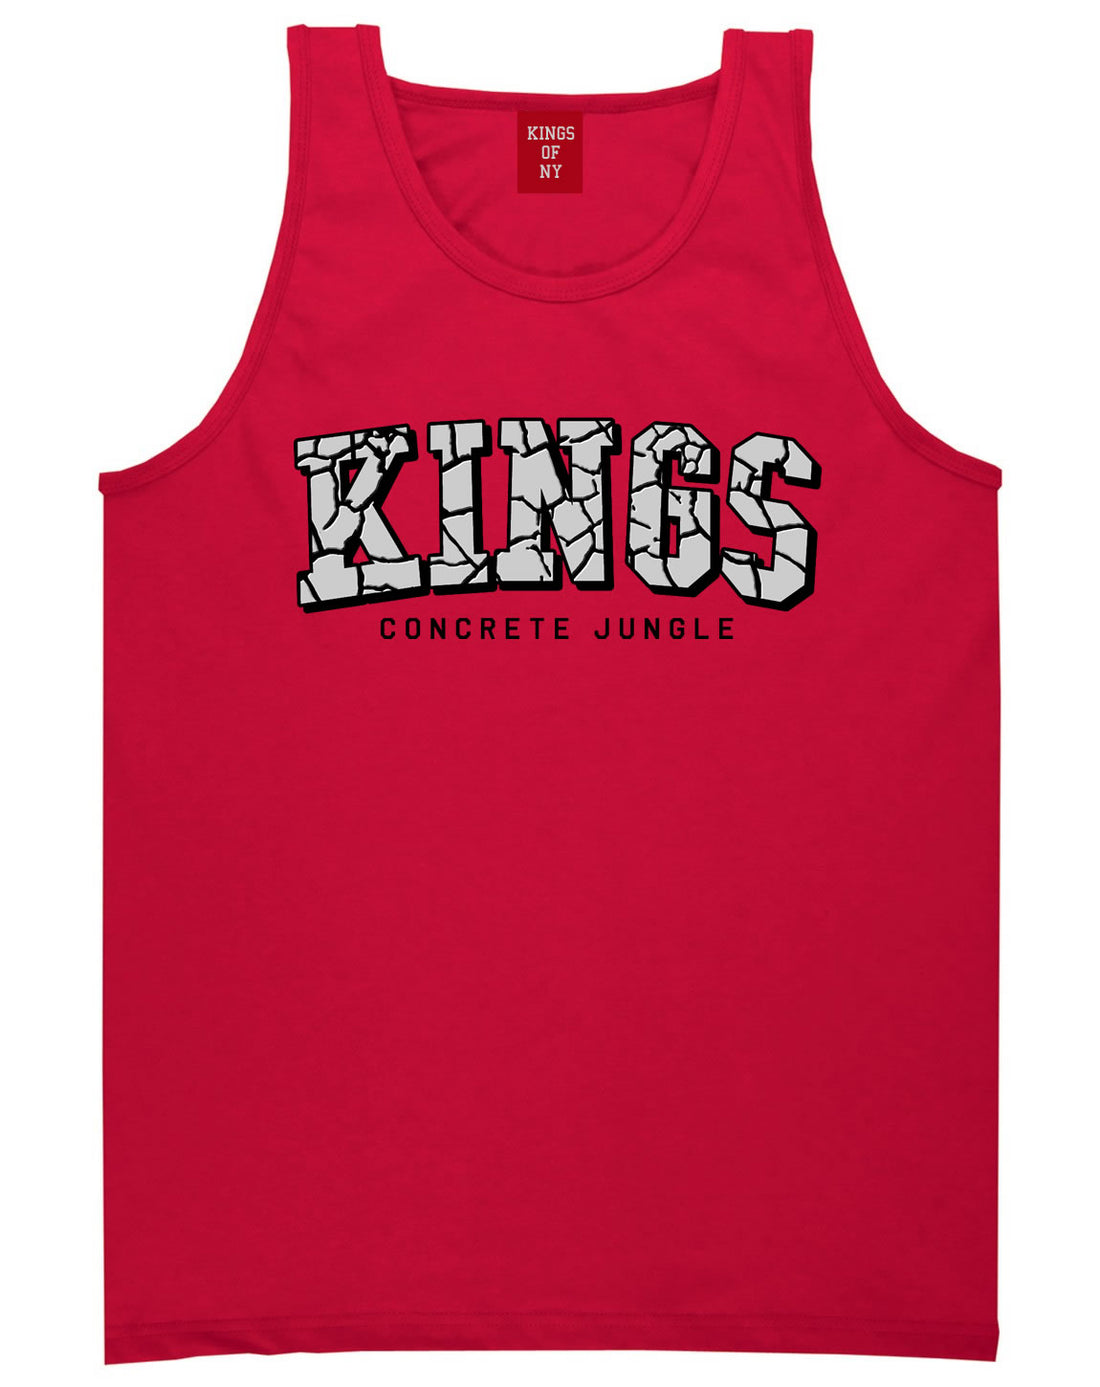 KINGS Conrete Jungle Mens Tank Top Shirt Red